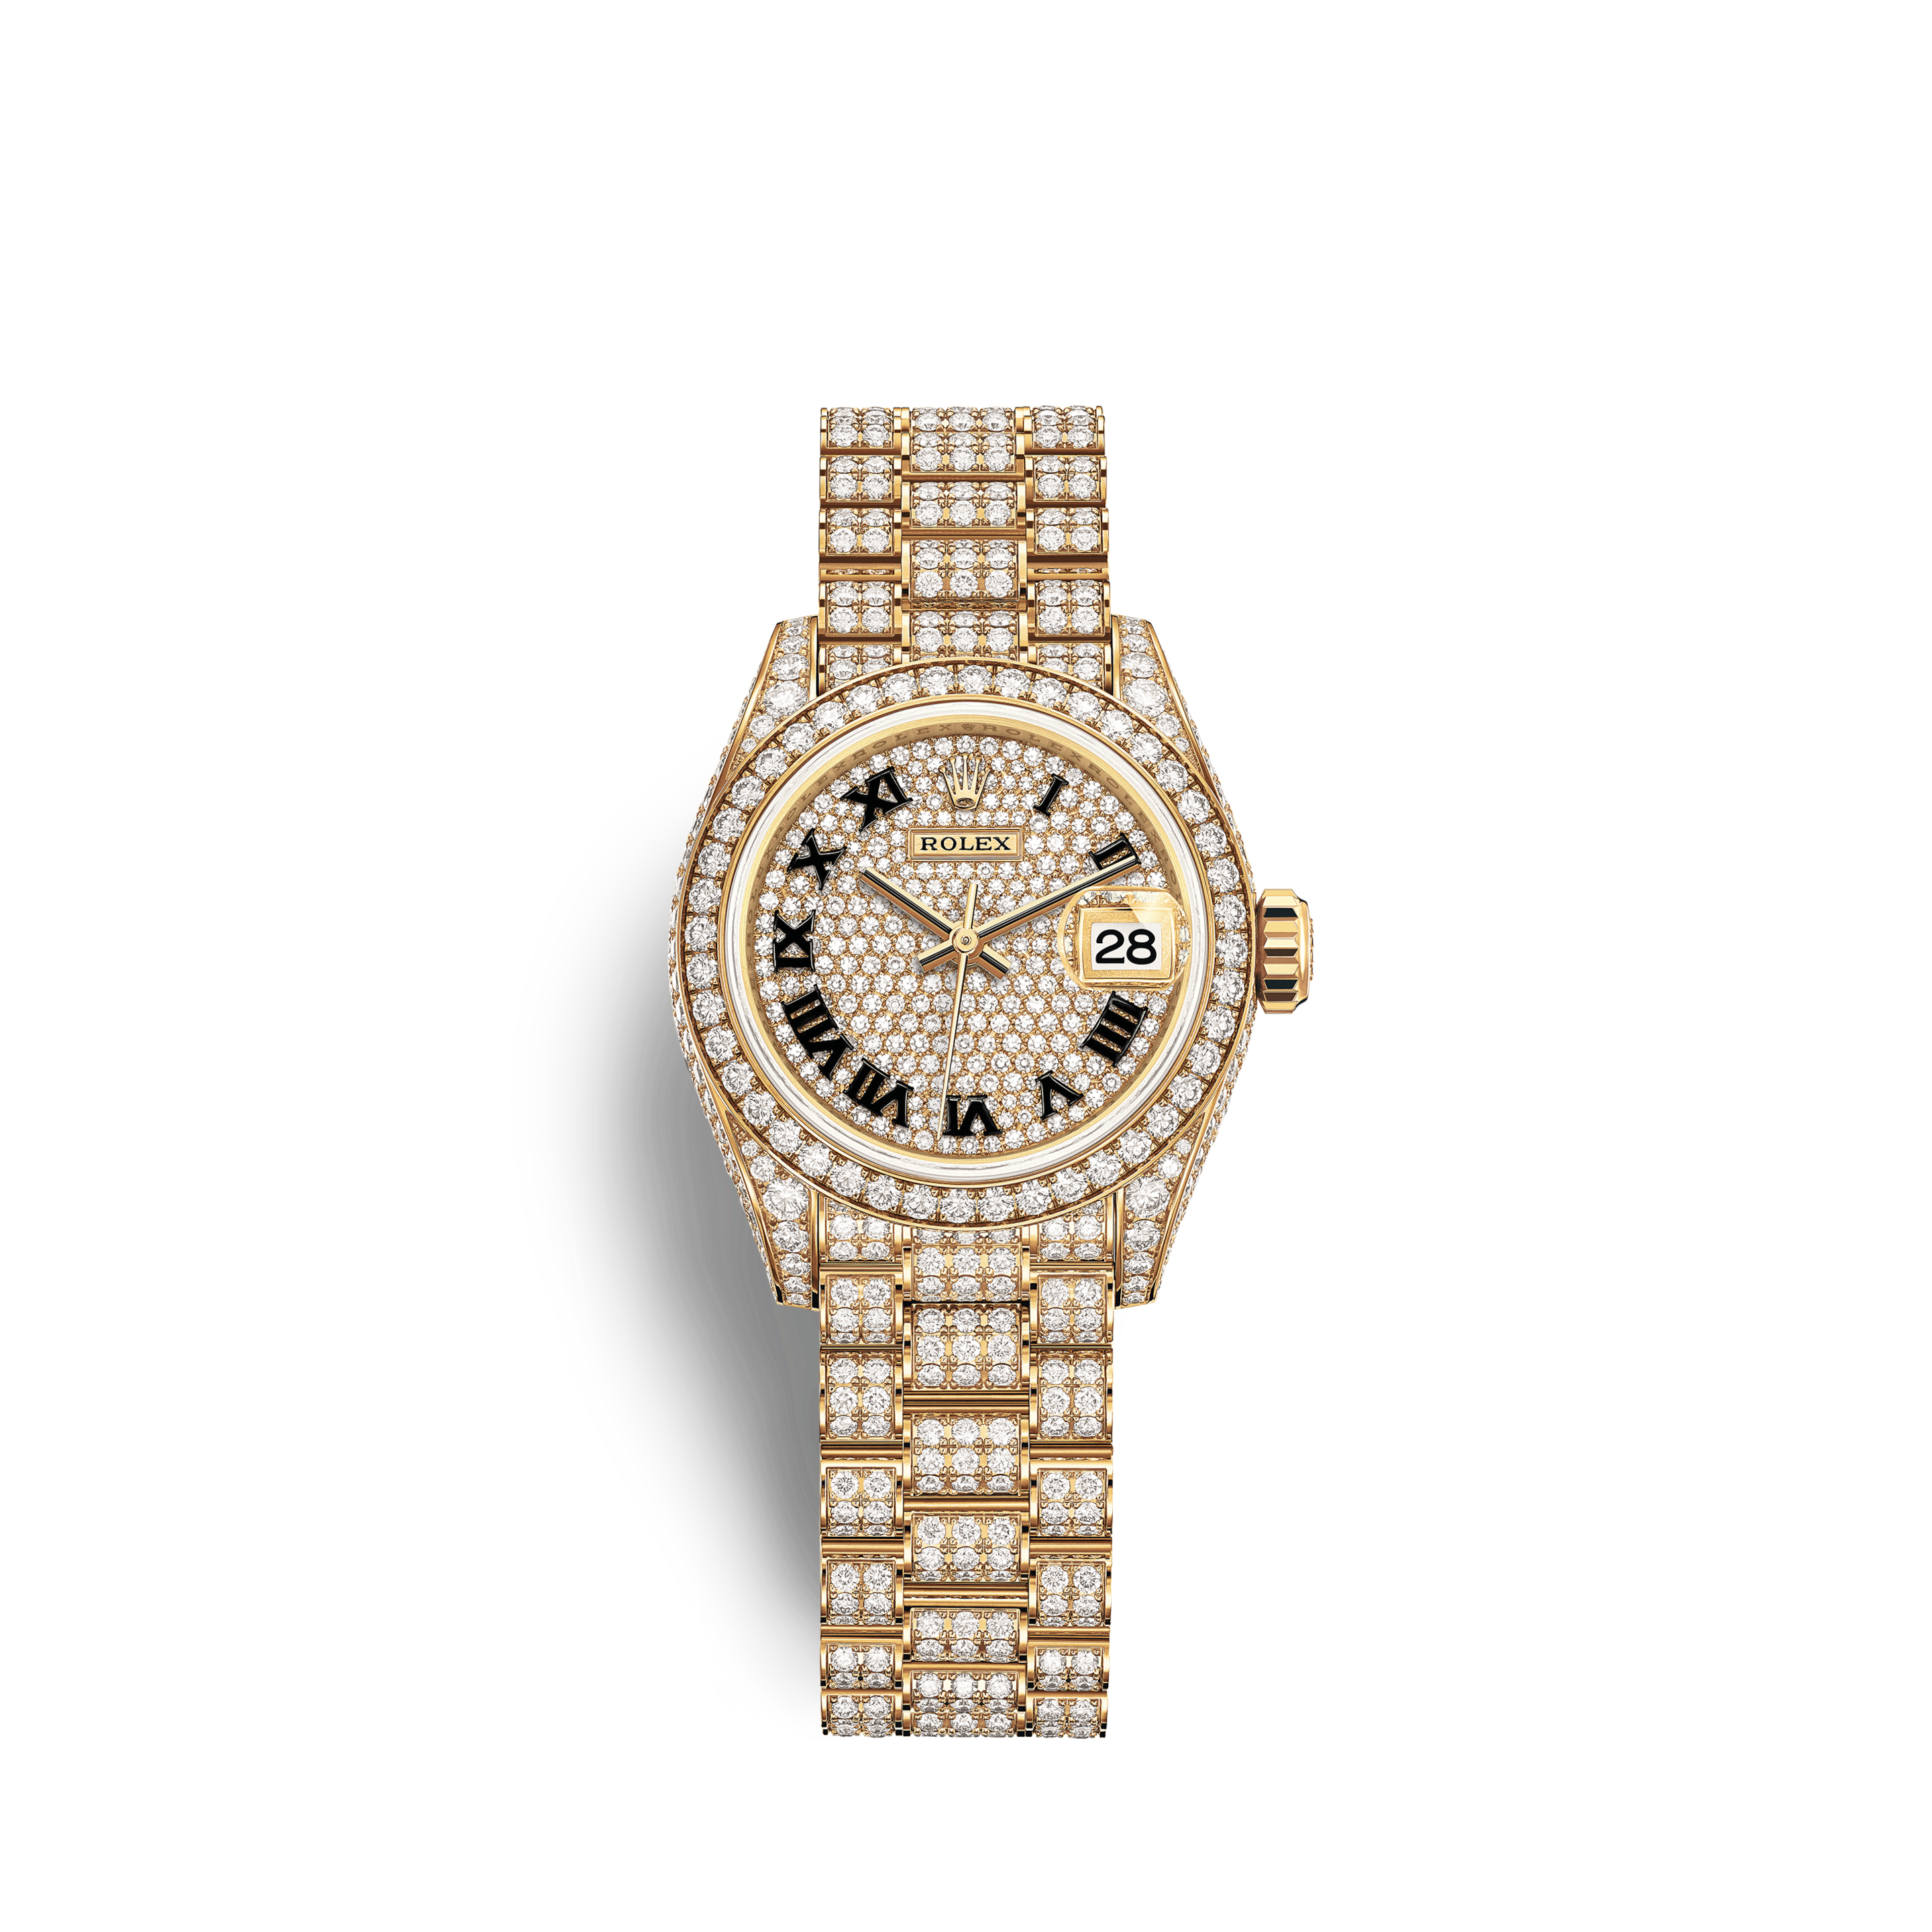 Rolex Cosmograph Daytona White Dial Watch 116500LN